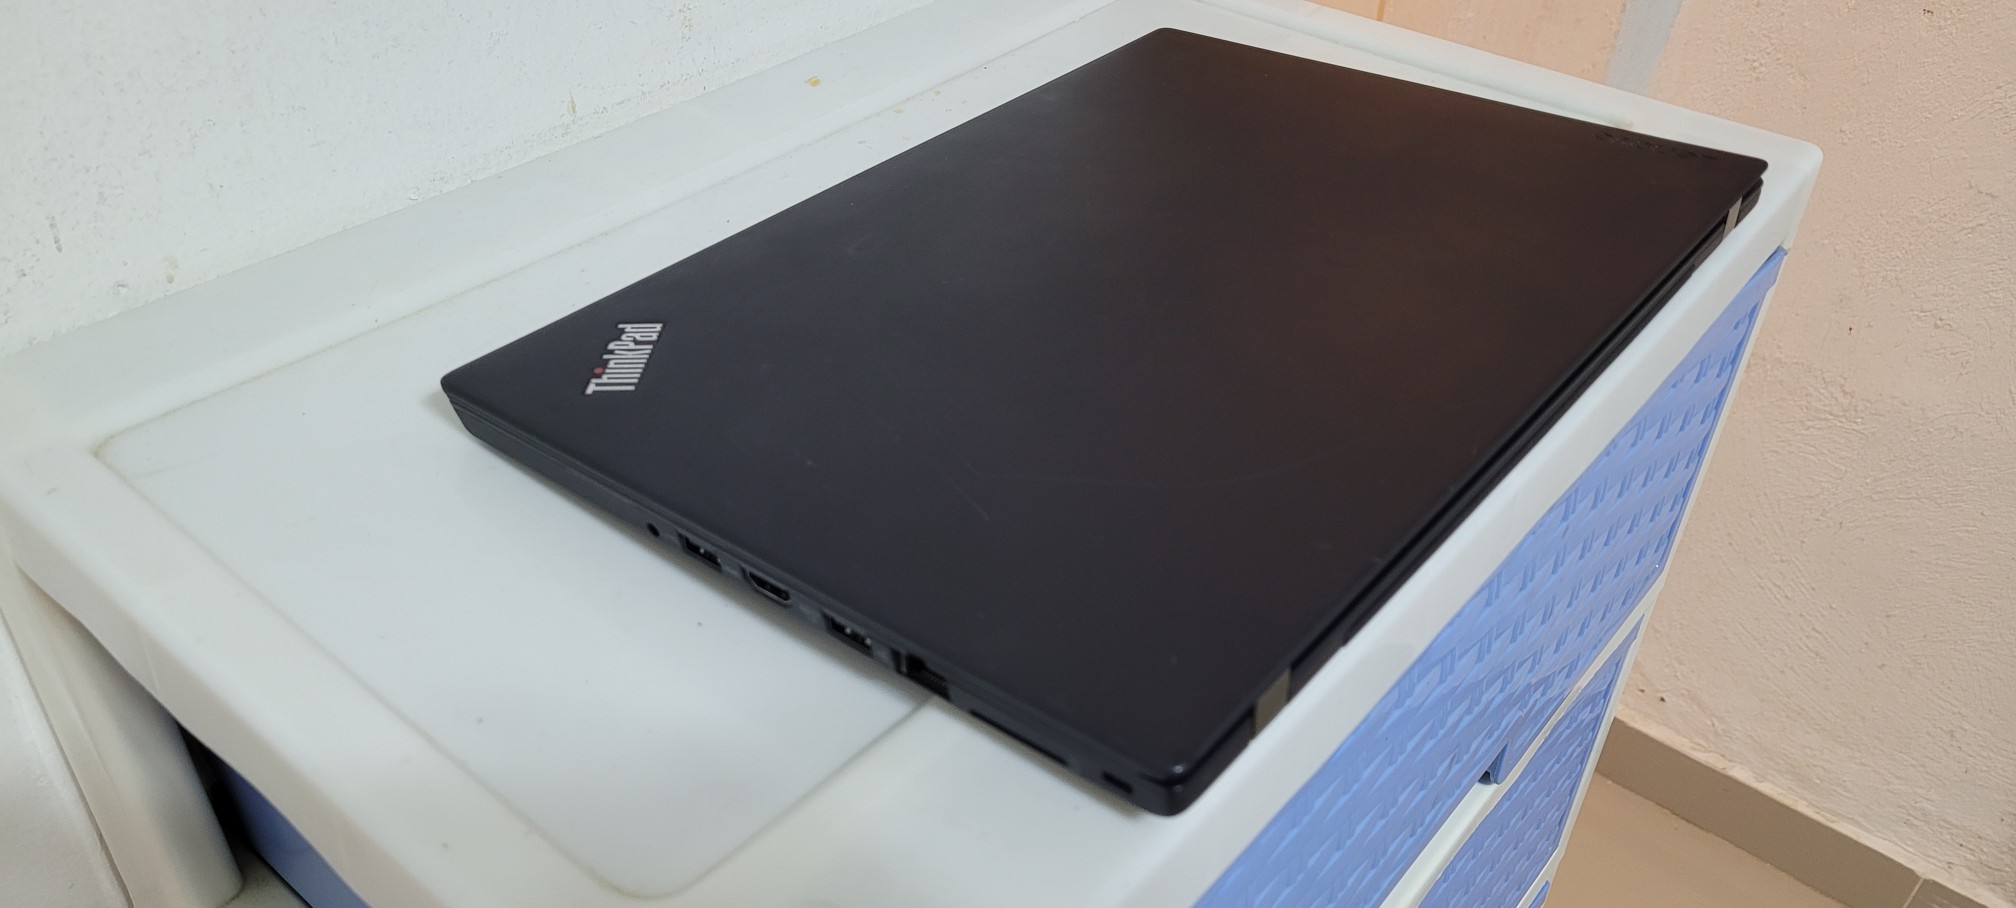 computadoras y laptops - Laptop lenovo de 14 Pulg Core i7 Ram 8gb Disco 256gb SSD Full 1080p 2